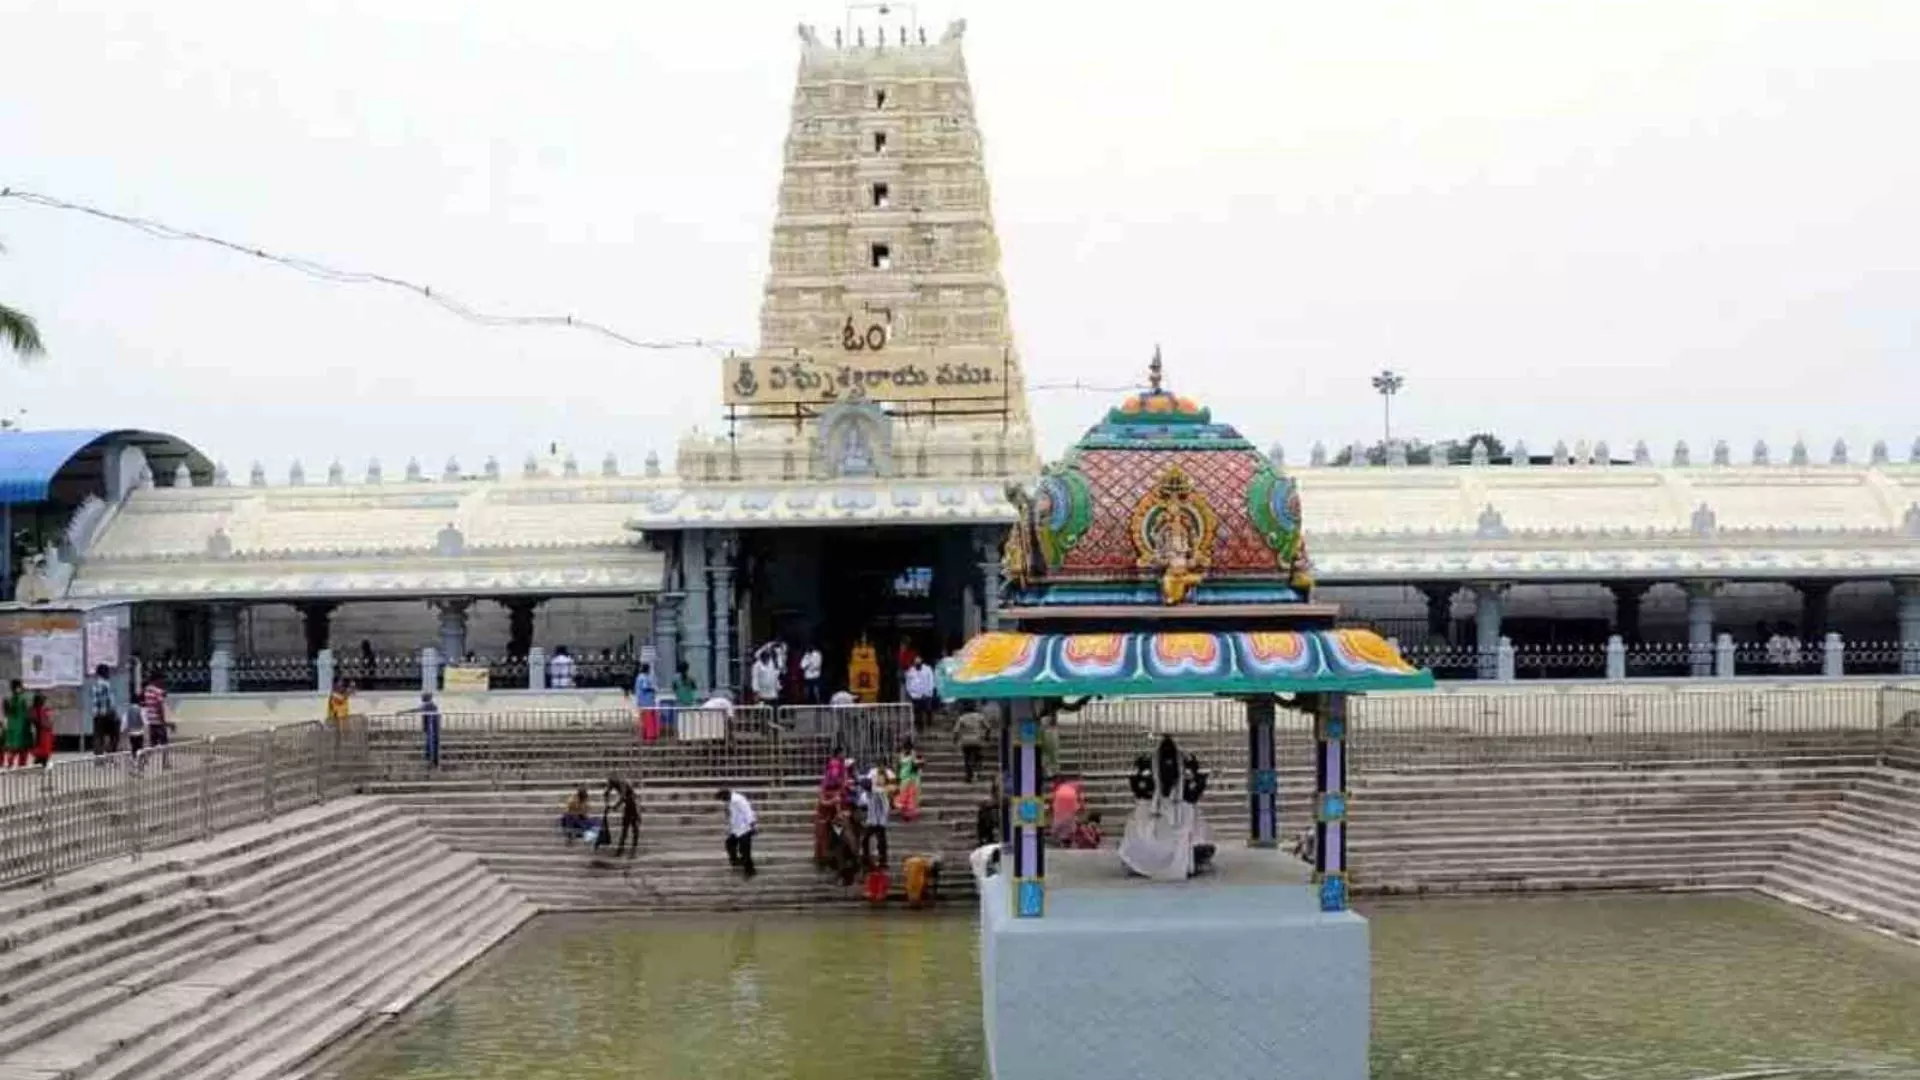 Brahmotsavams for 21 days in Kanipakam Temple